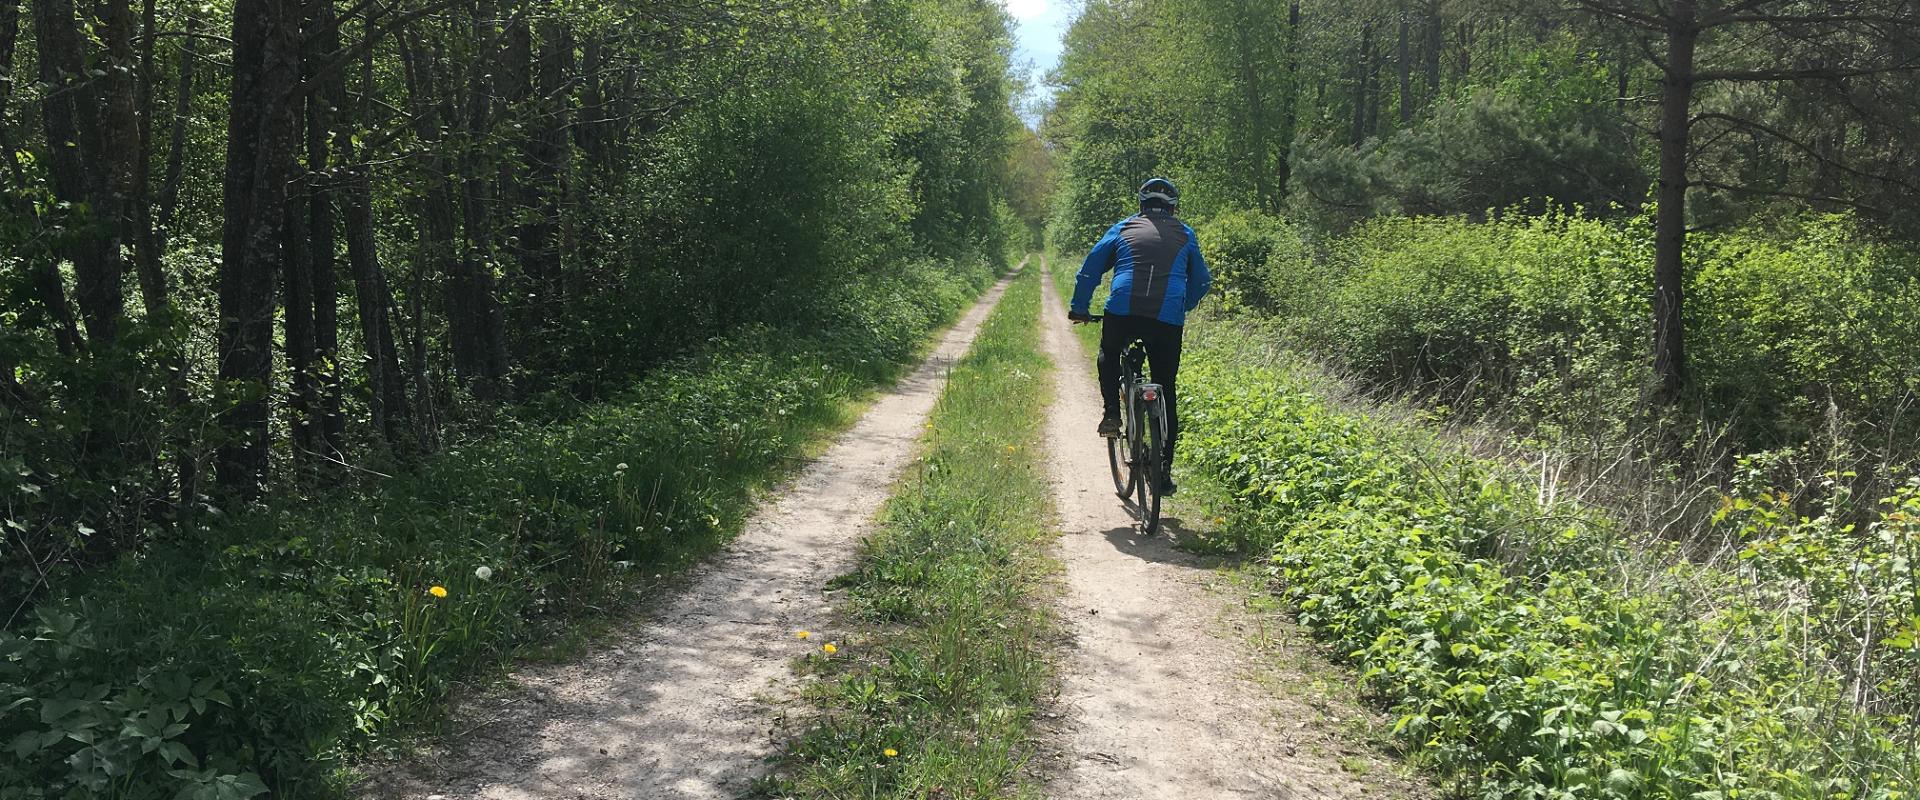 Discovering Sõrve Peninsula by bike